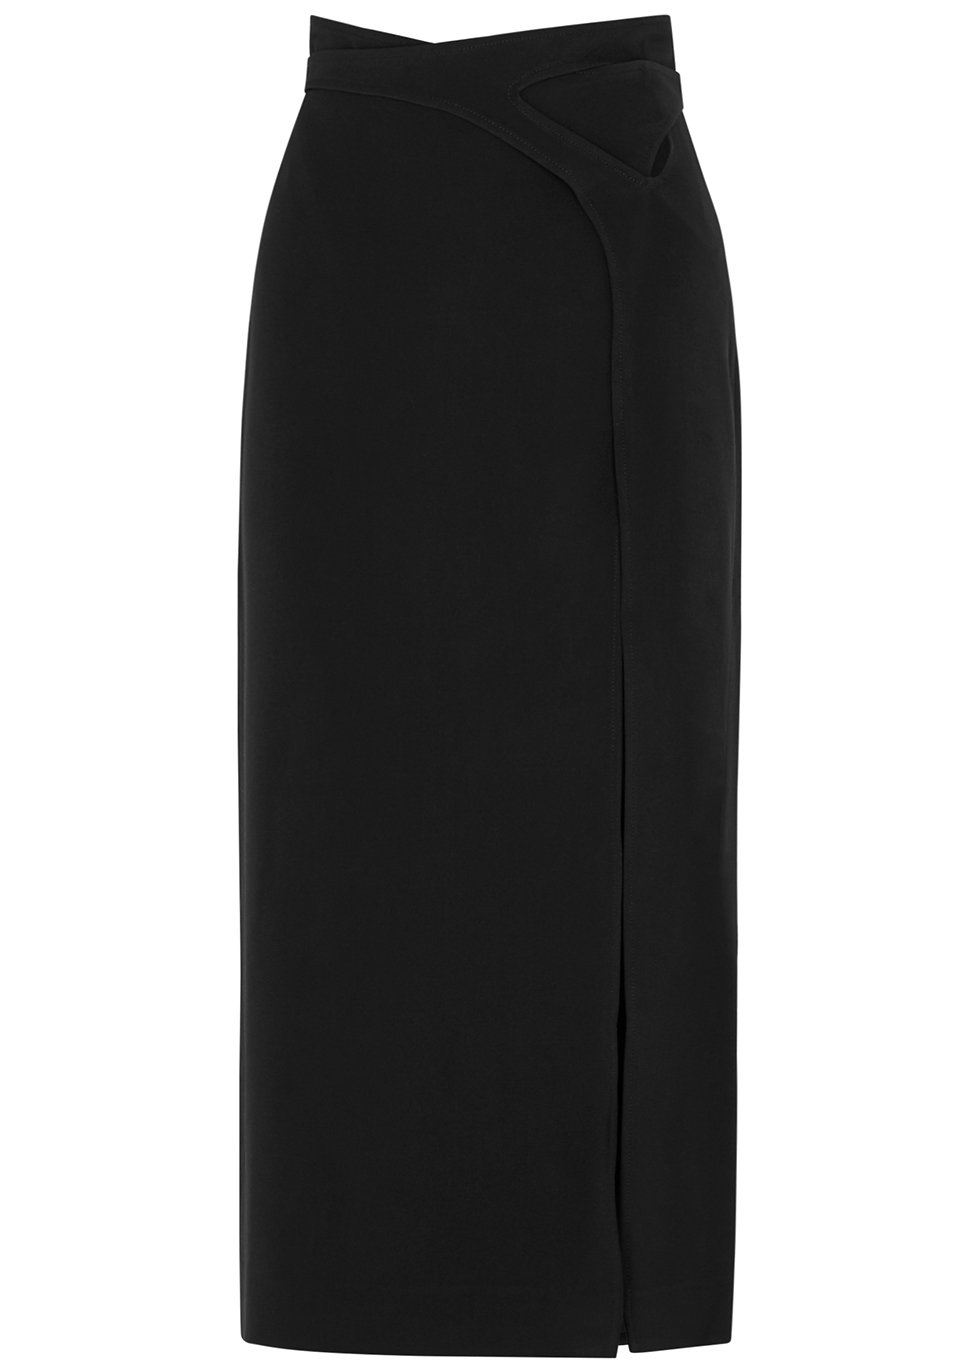 Interlock black midi skirt